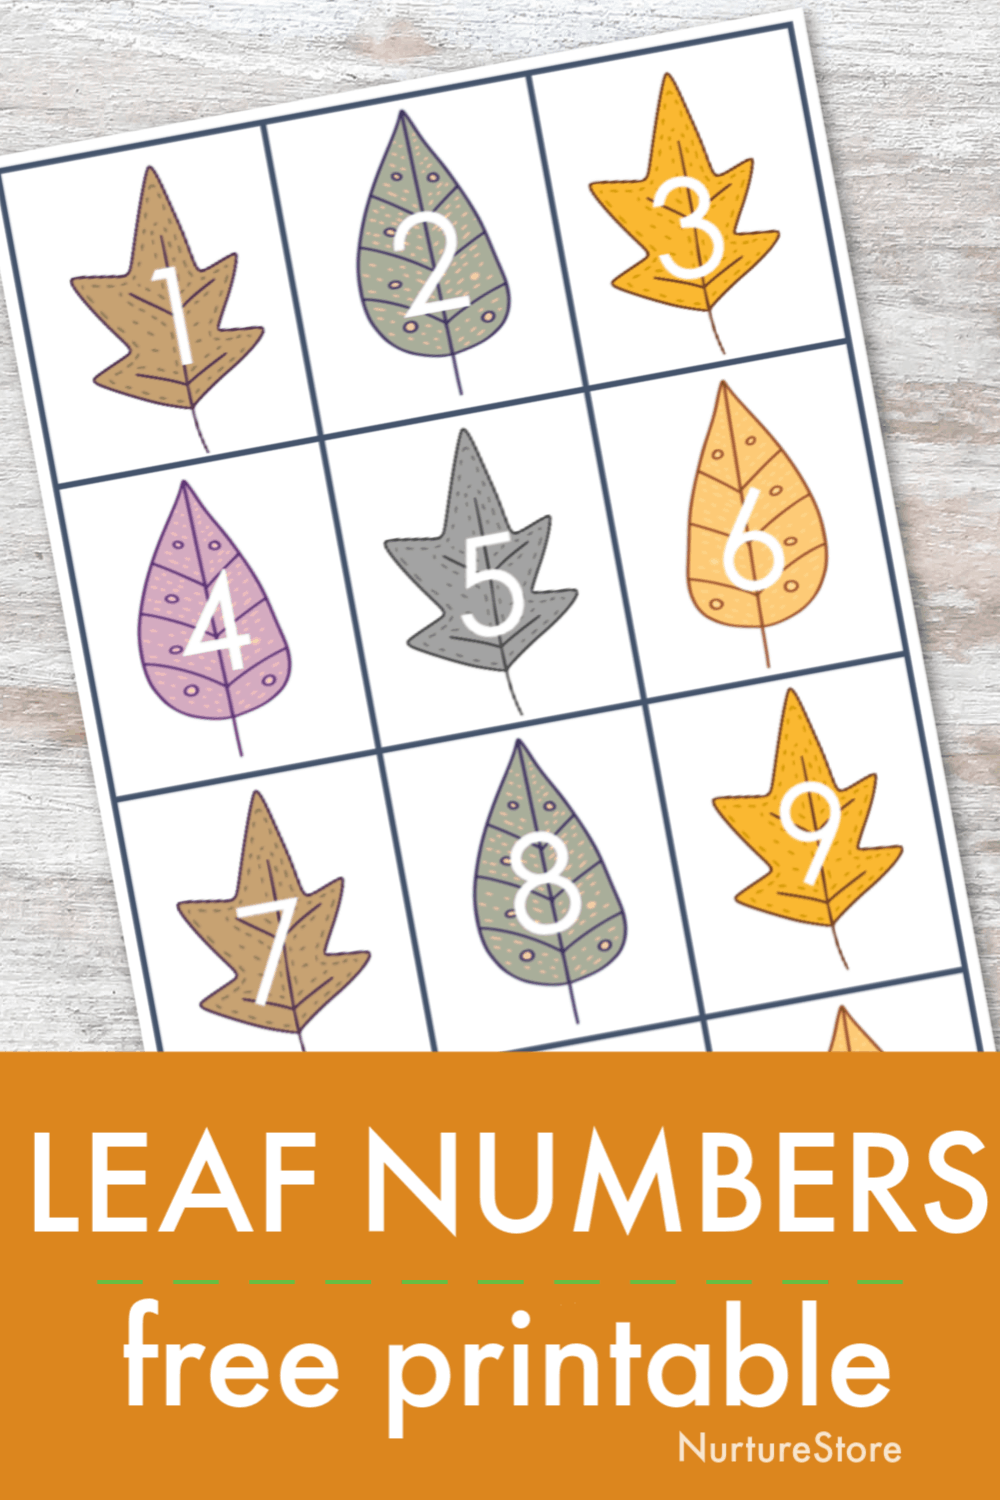 leaf-number-printable-for-fall-math-activities-laptrinhx-news